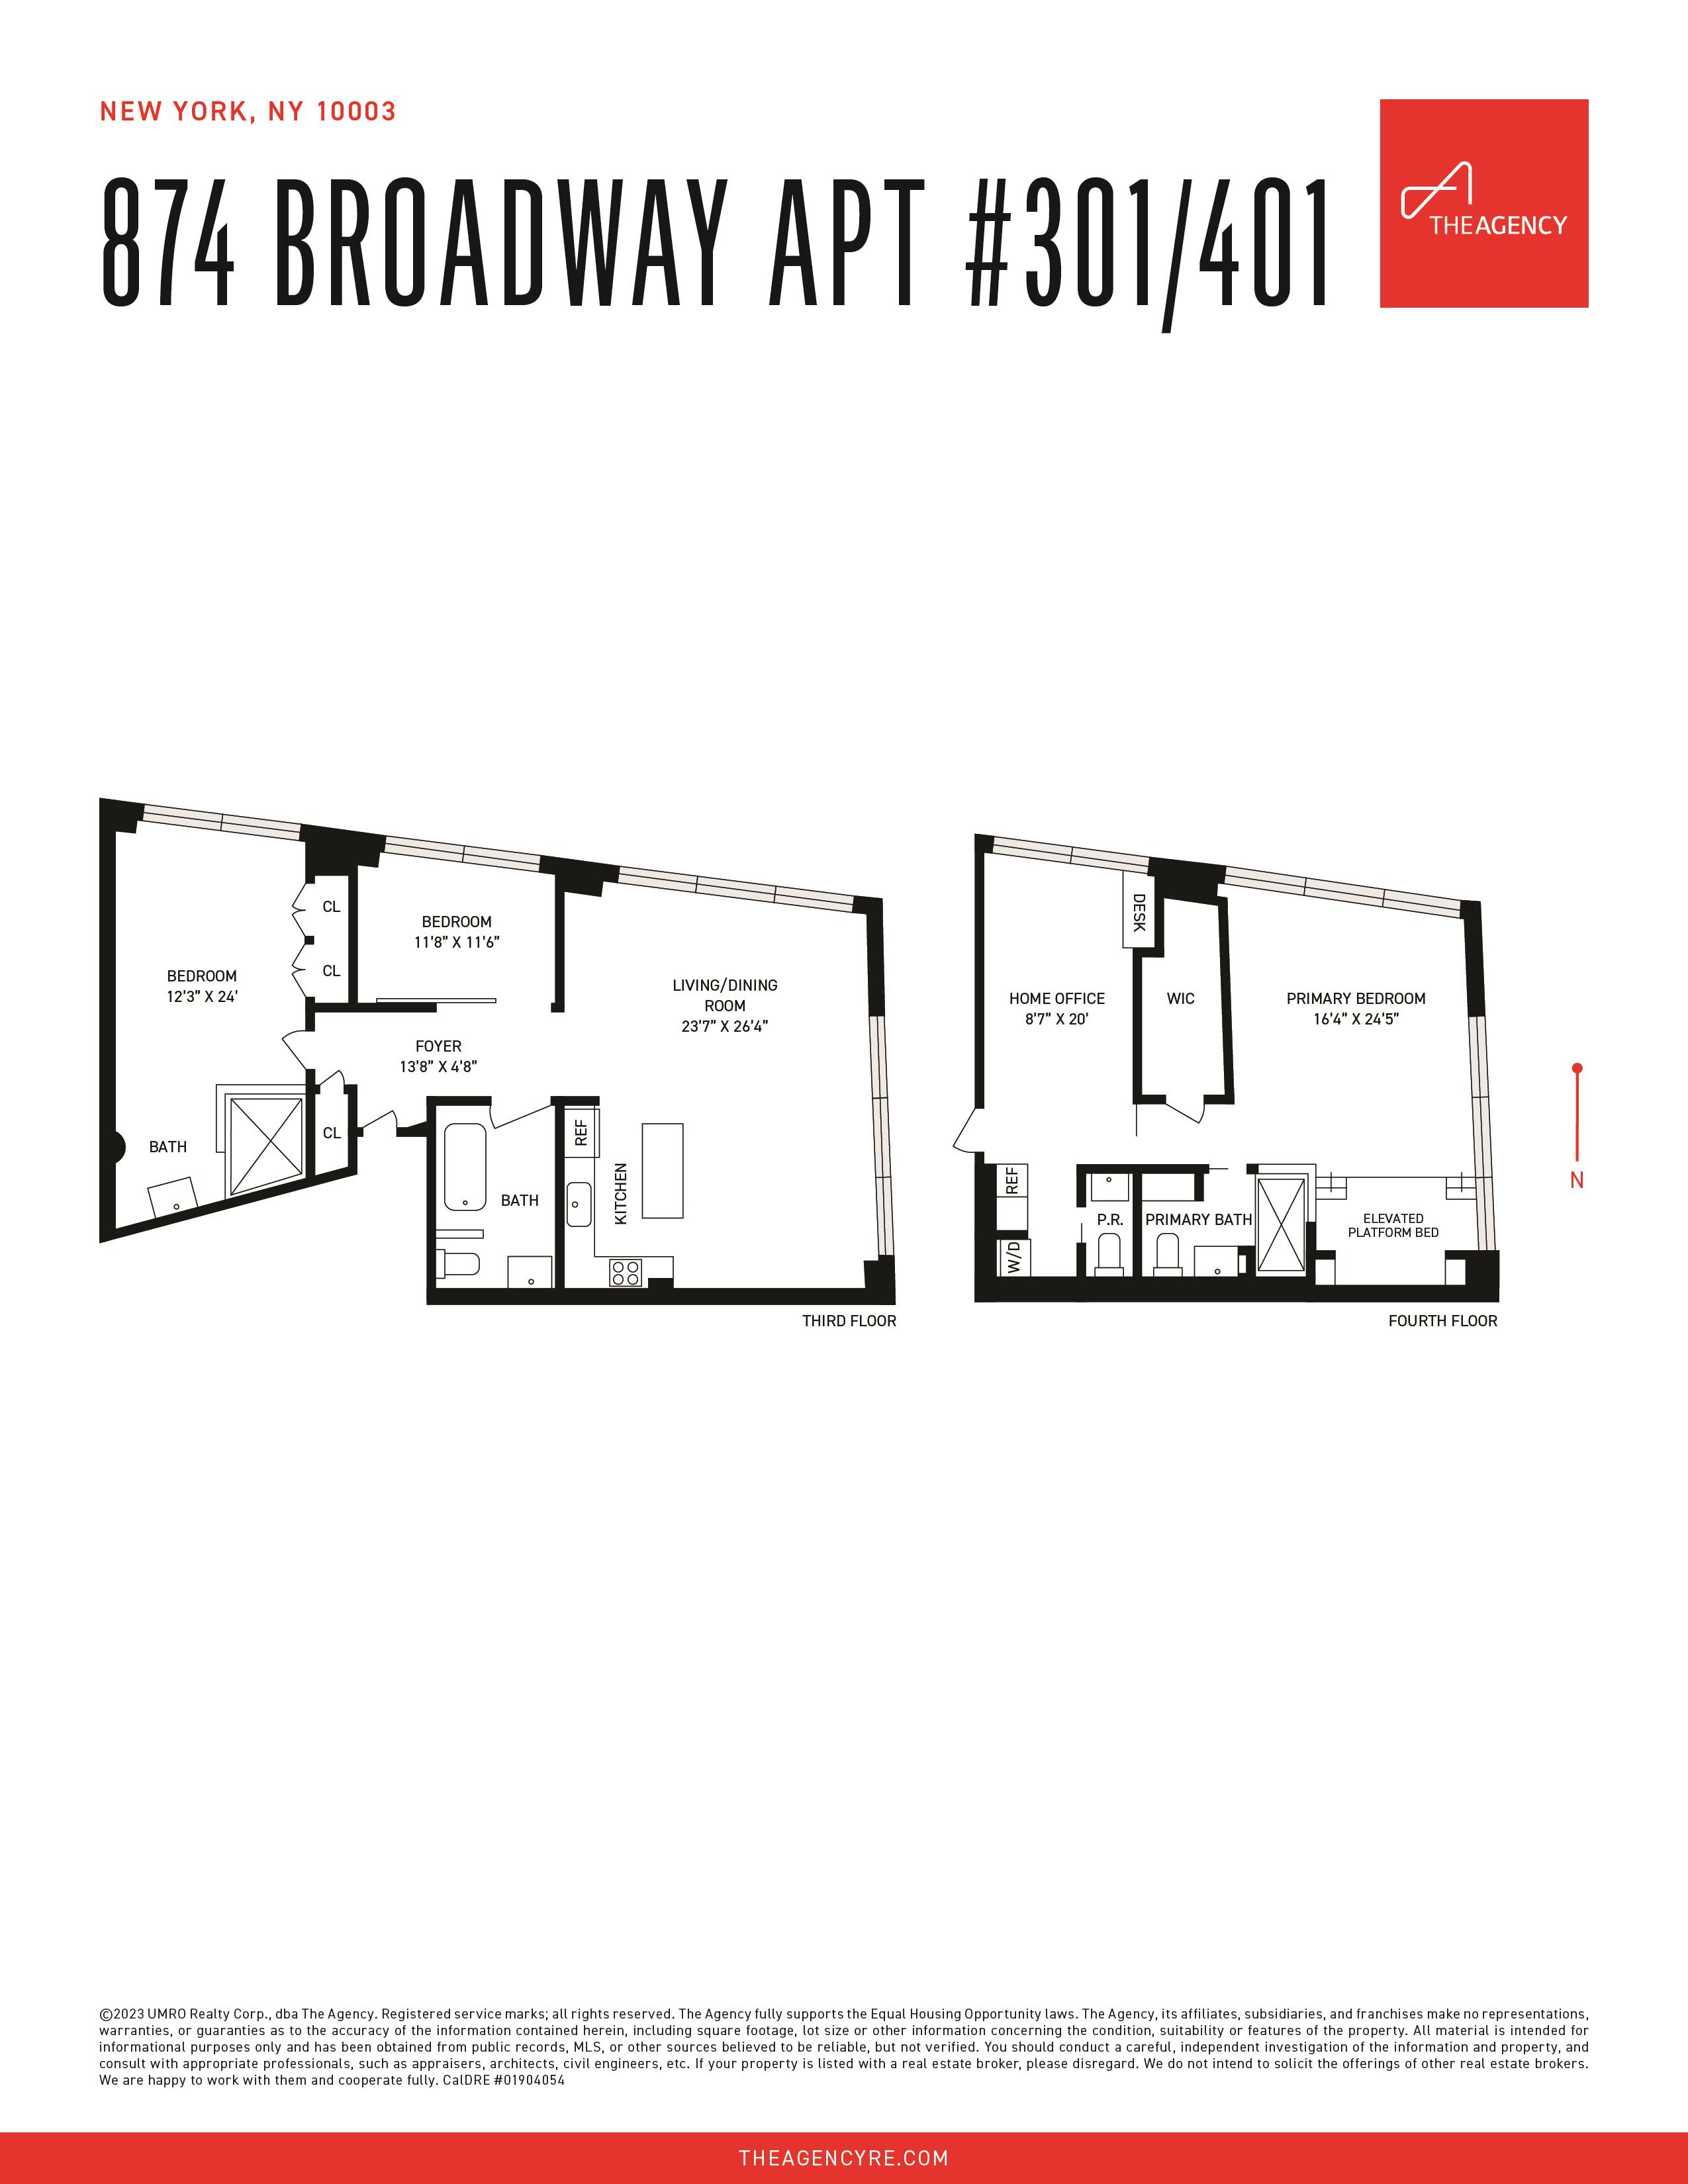 Floorplan for 874 Broadway, 301/401